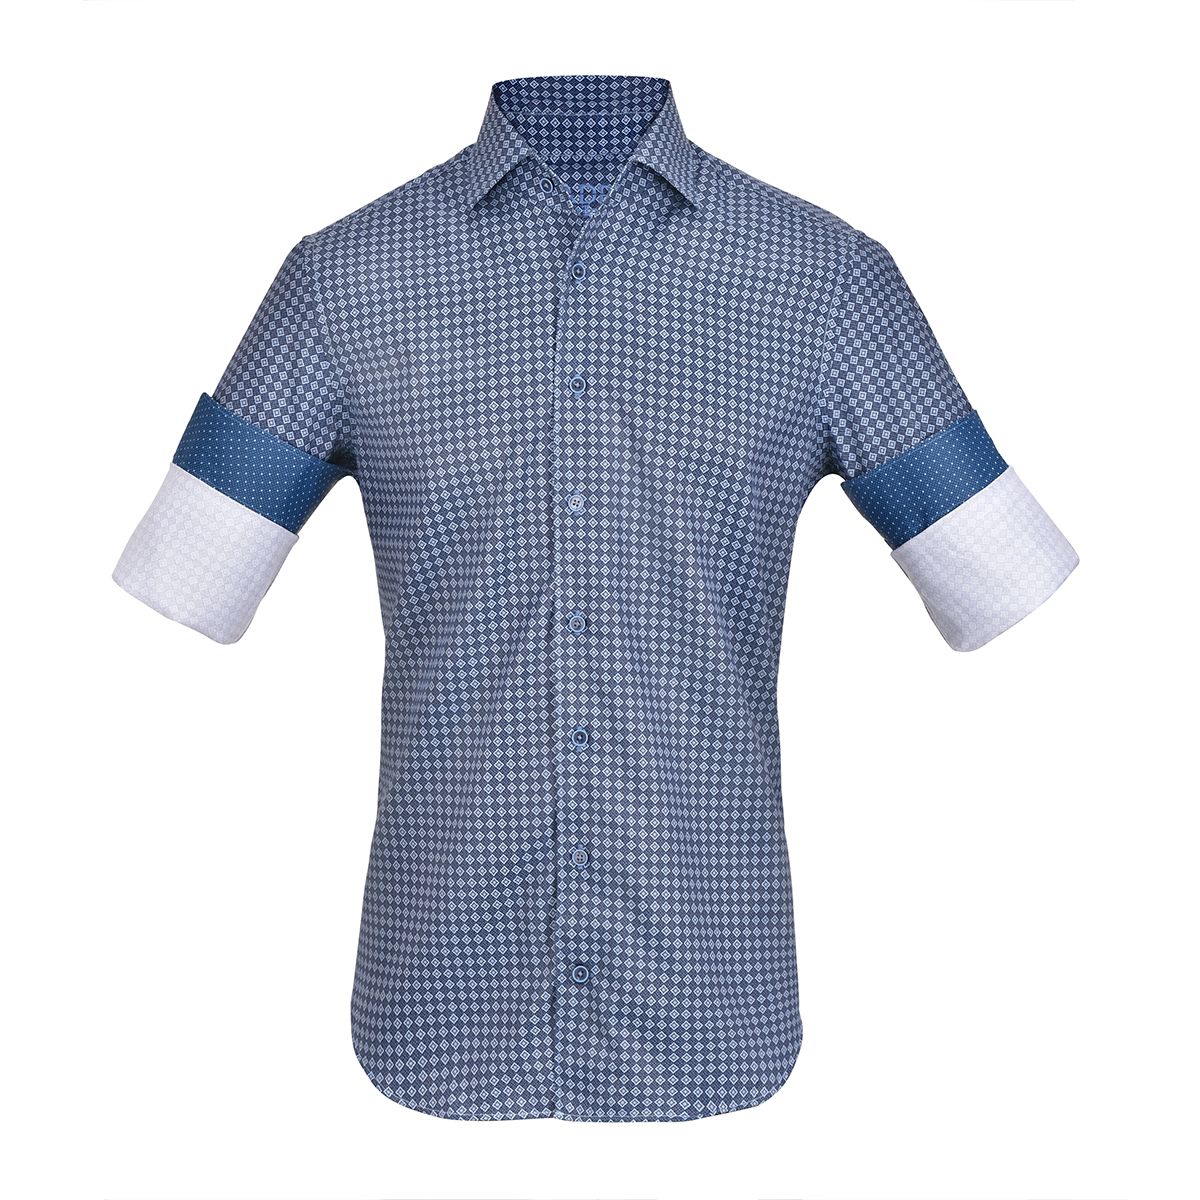 CMW563R - Cuadra navy casual fashion cotton shirt for men-Kuet.us